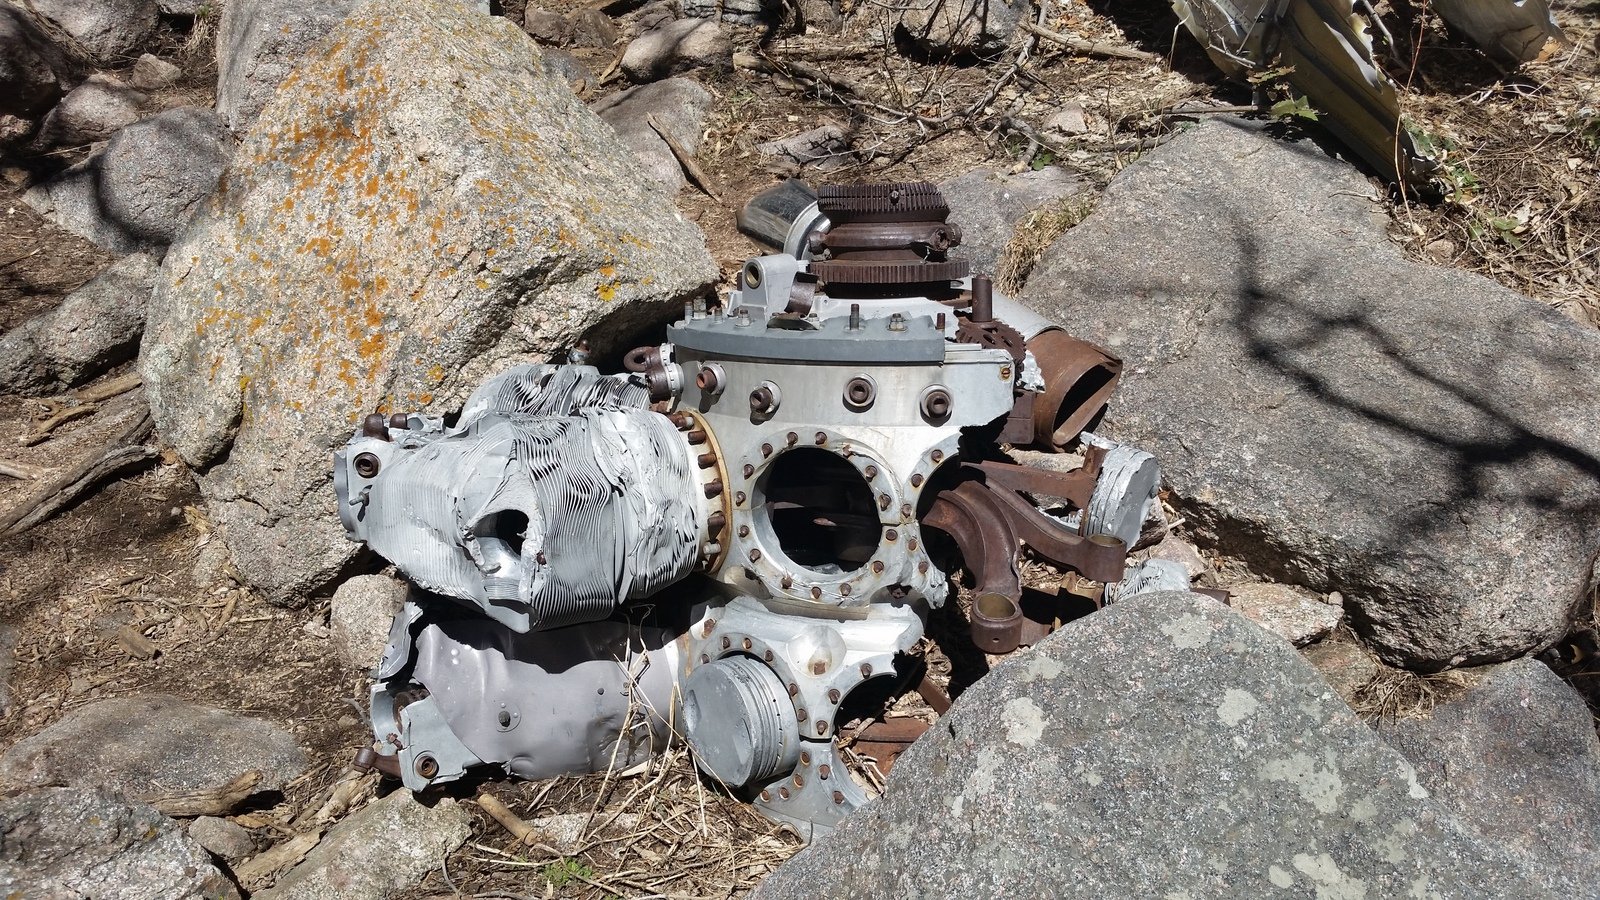 TWA flight 260 crash site. 